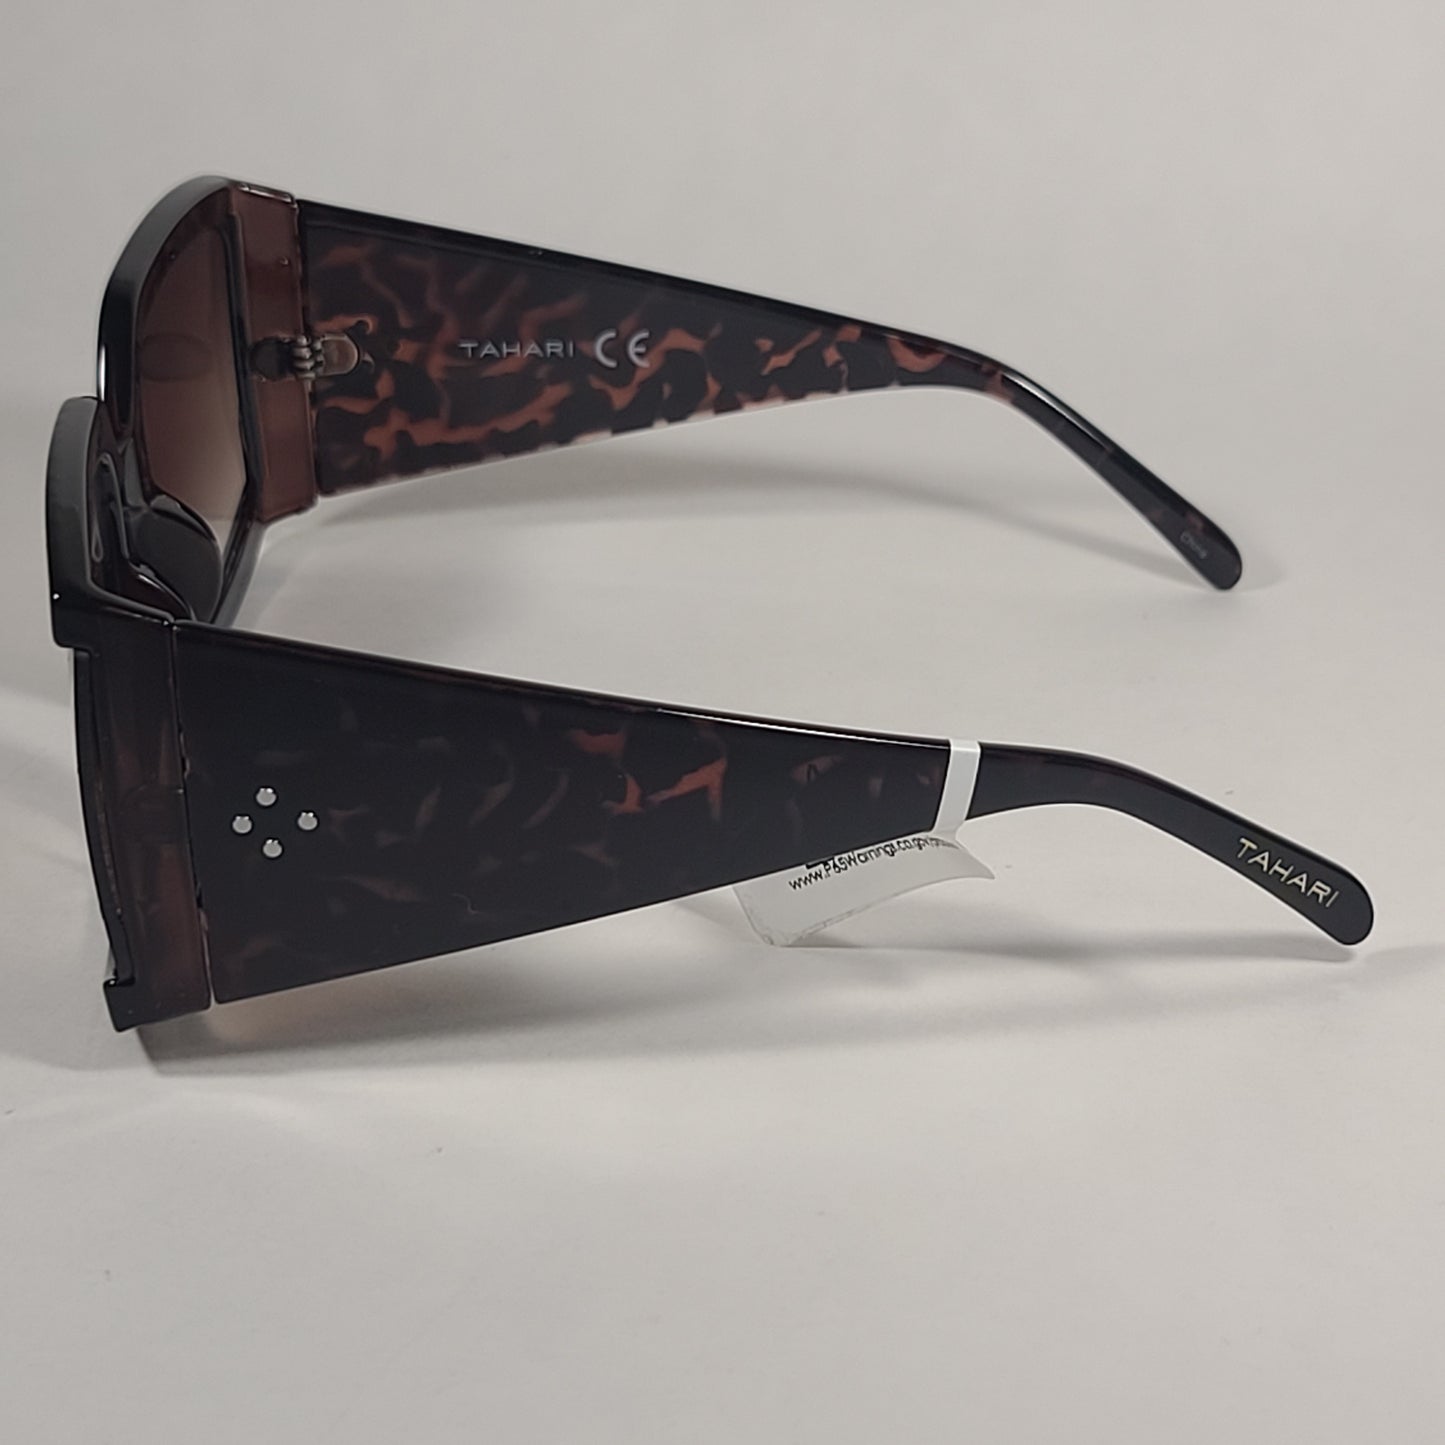 Tahari Oversize Square Sunglasses Dark Brown Tortoise Brown Gradient TH810 DKTS - Sunglasses